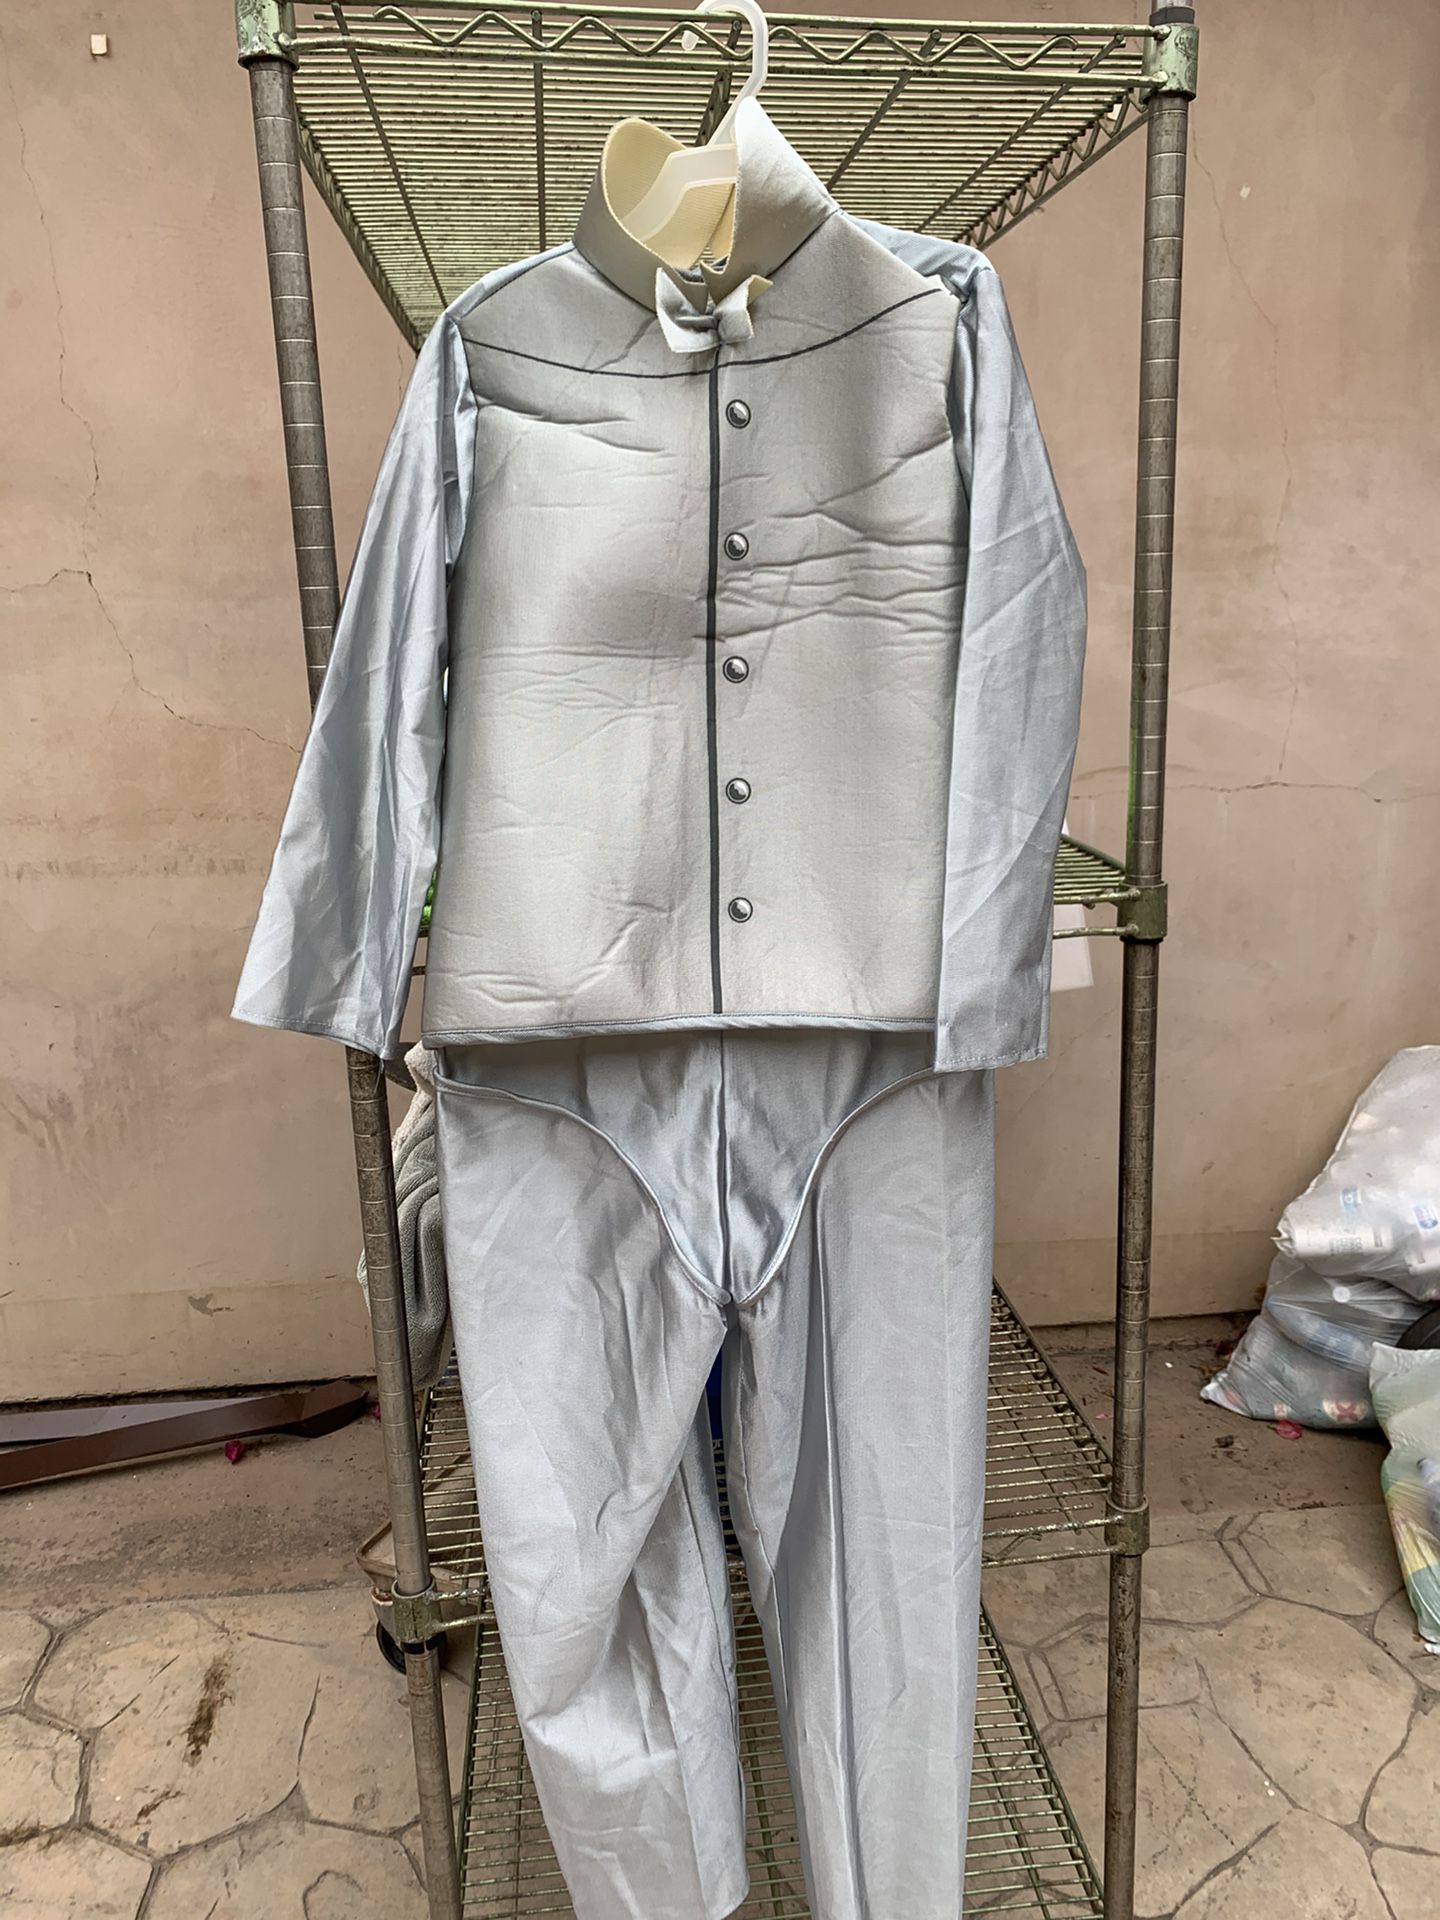 Boys size Large (8-10) Tin man costume $9